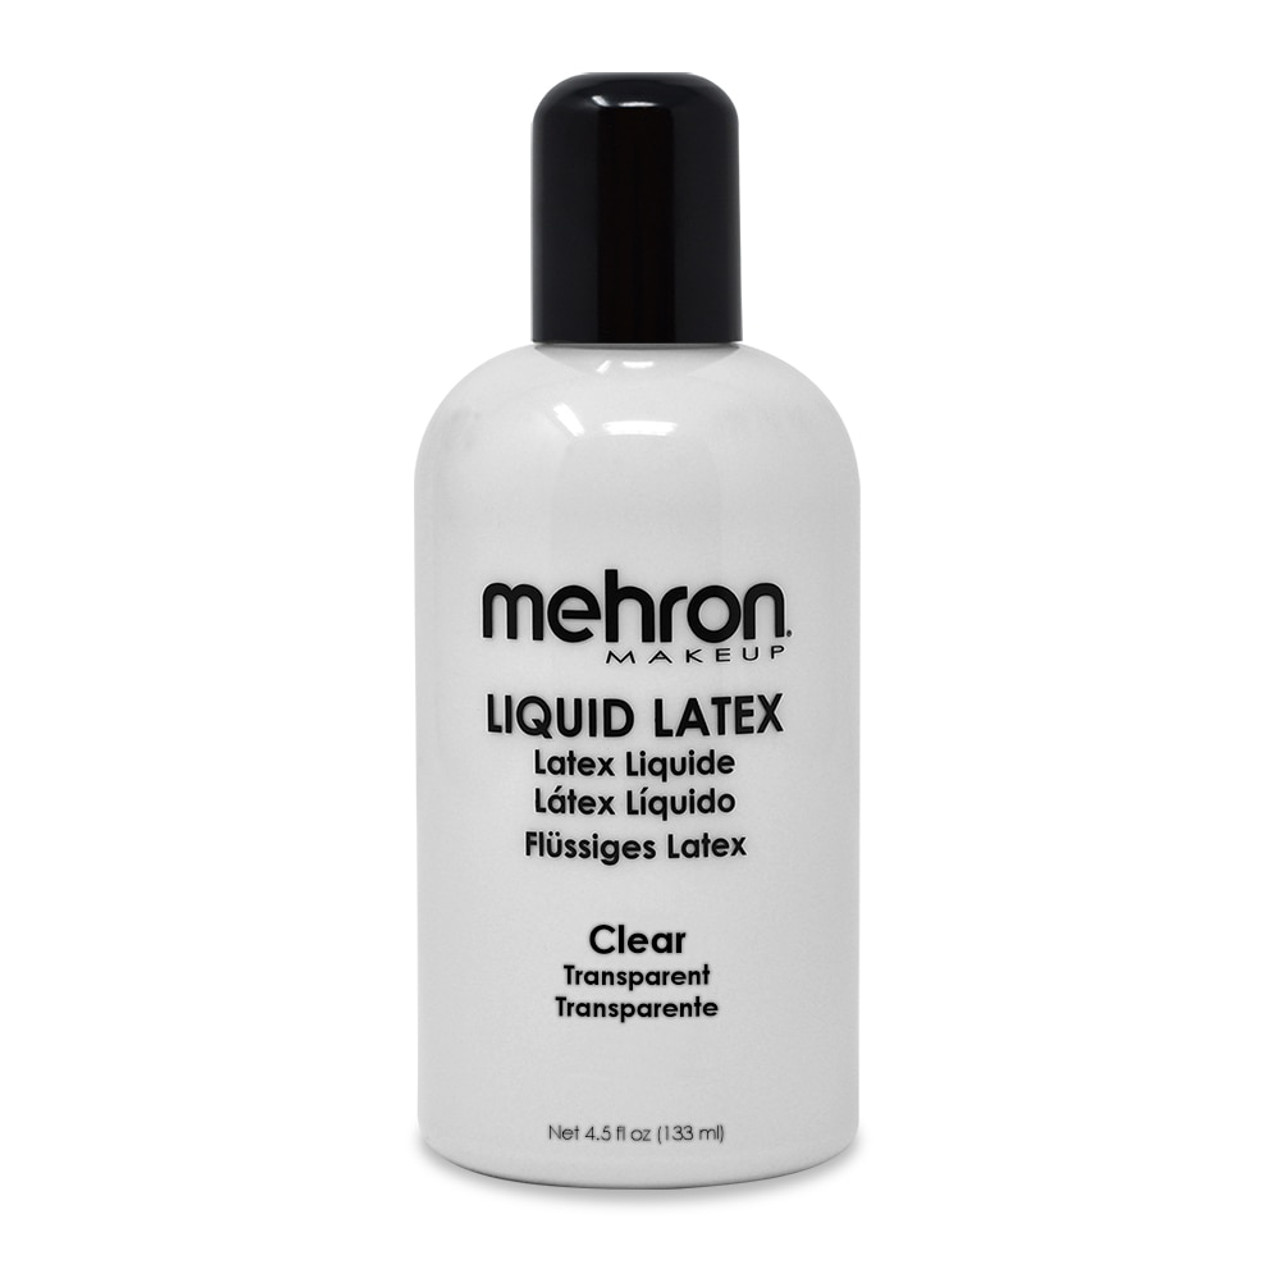 Mehron Makeup Liquid Latex